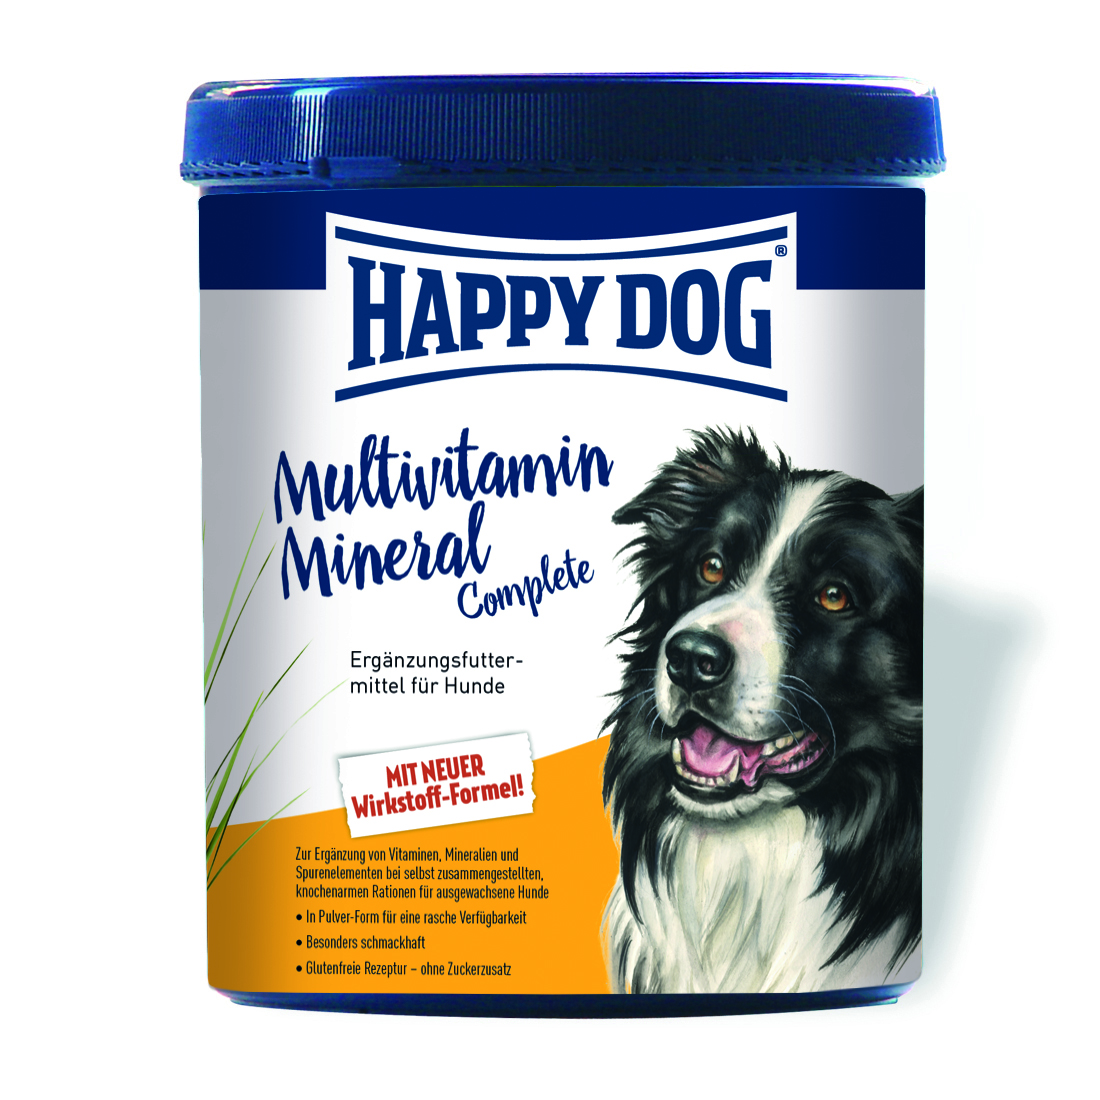 Nowe suplementy diety od Happy Dog! Multivitamin Mineral Complete